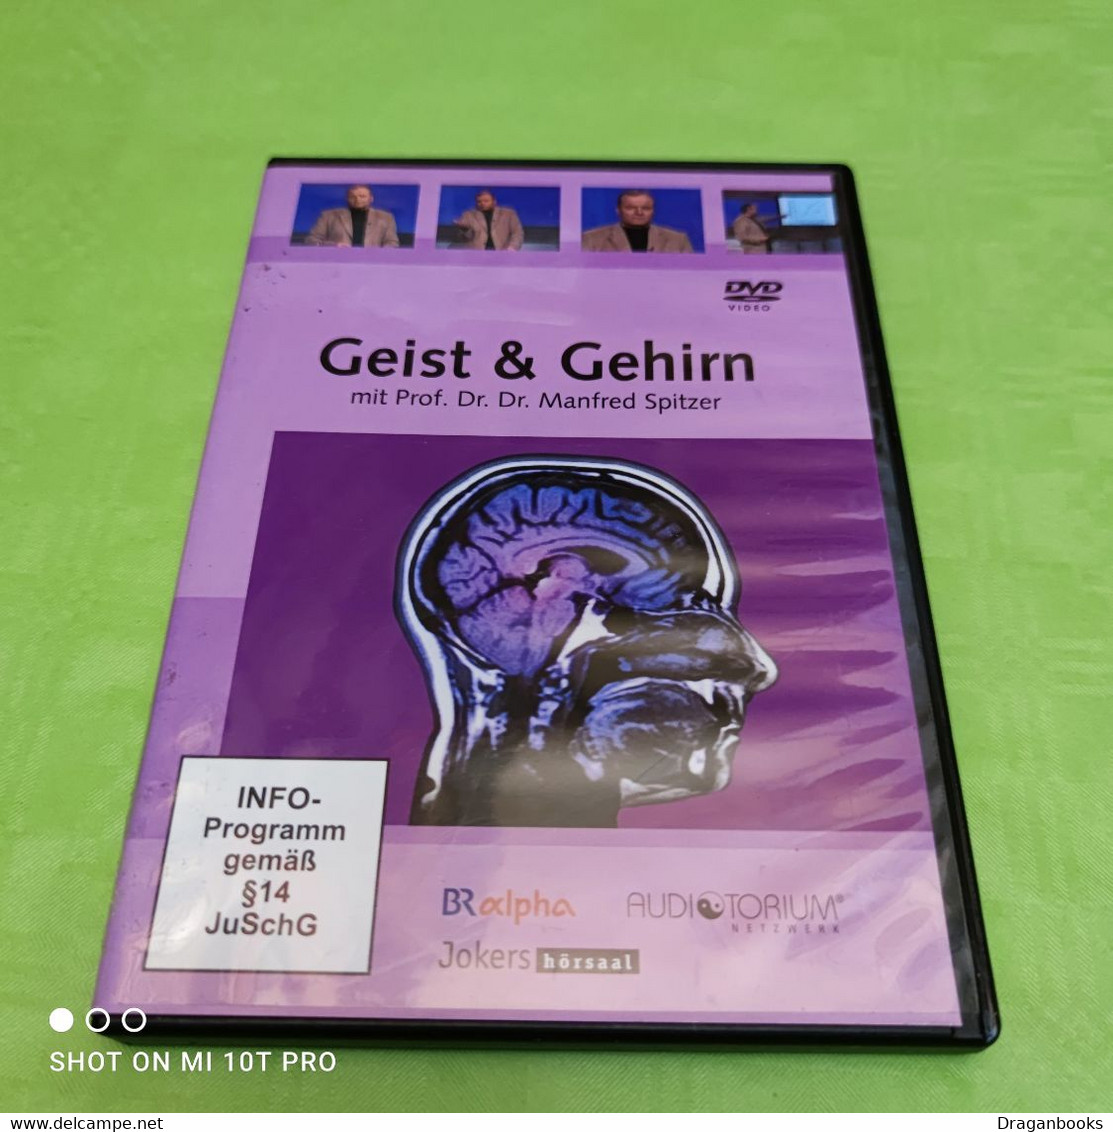 Geist & Gehirn - Documentary